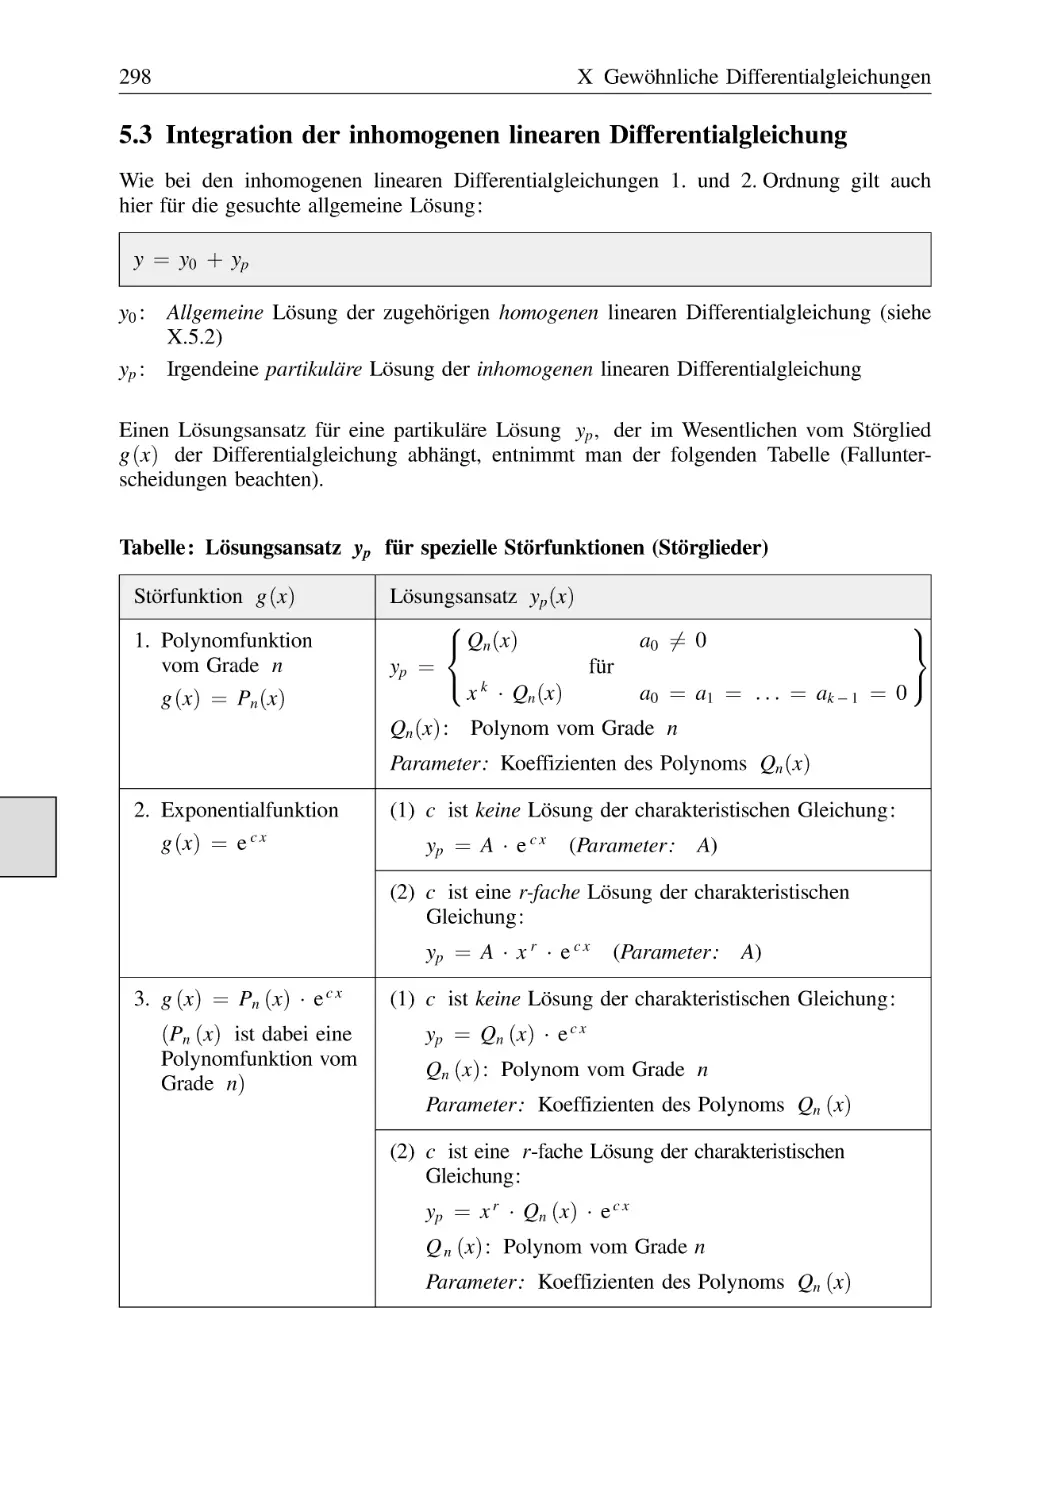 5.3 Integration der inhomogenen linearen Differentialgleichung